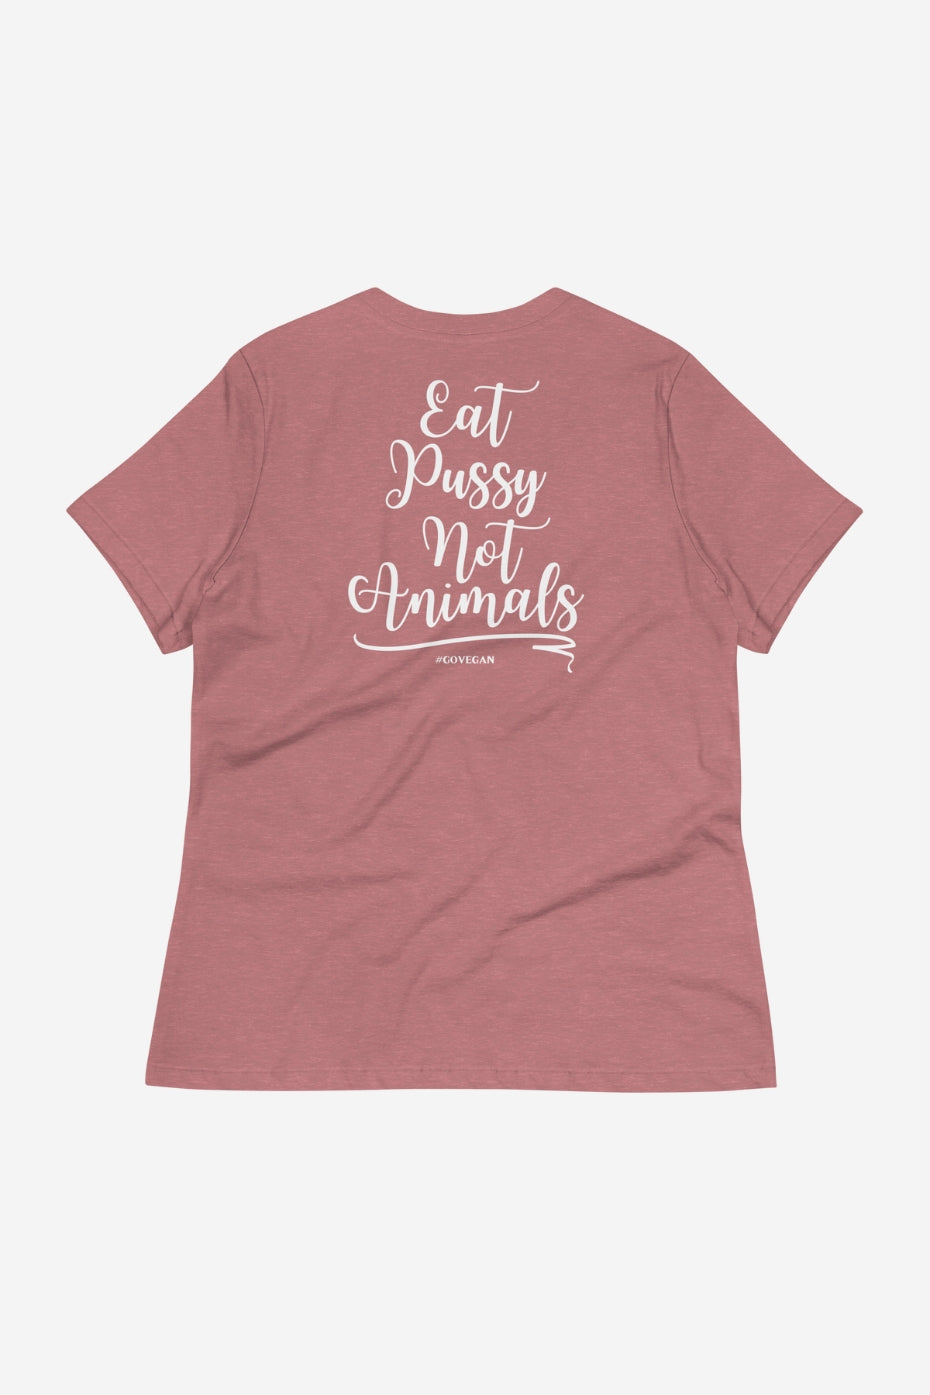 Not Animals Women's Relaxed T-Shirt (Back Print)